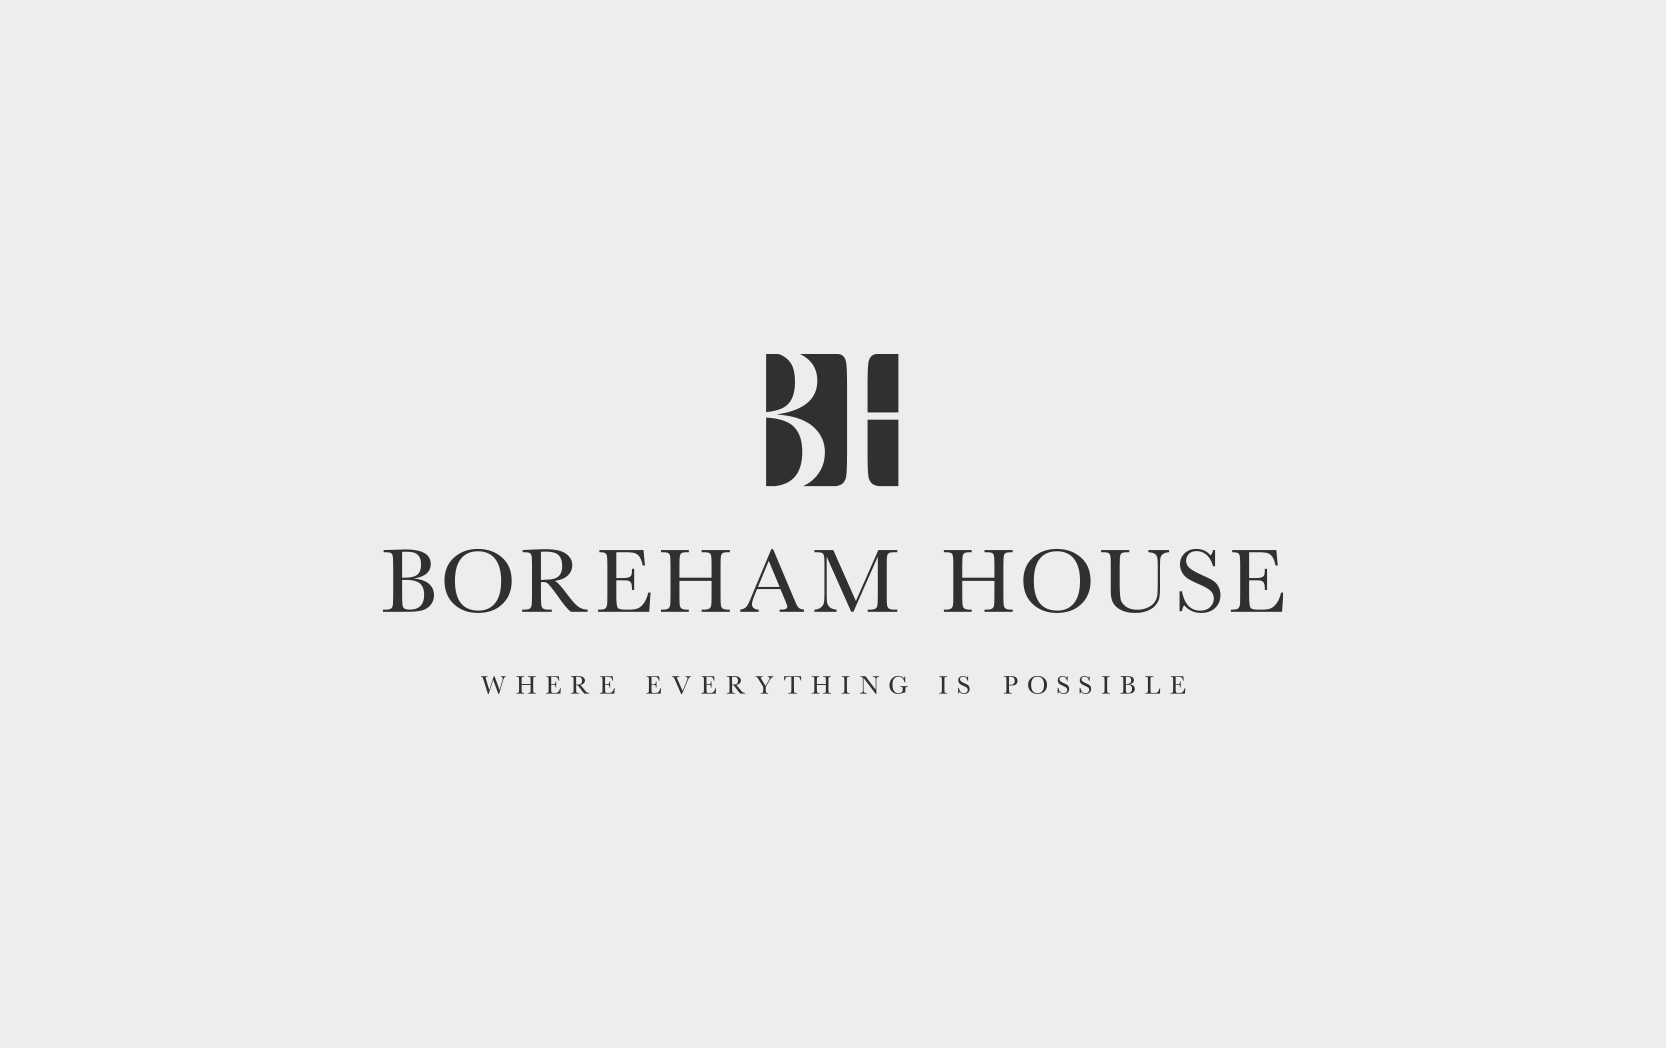 Boreham House